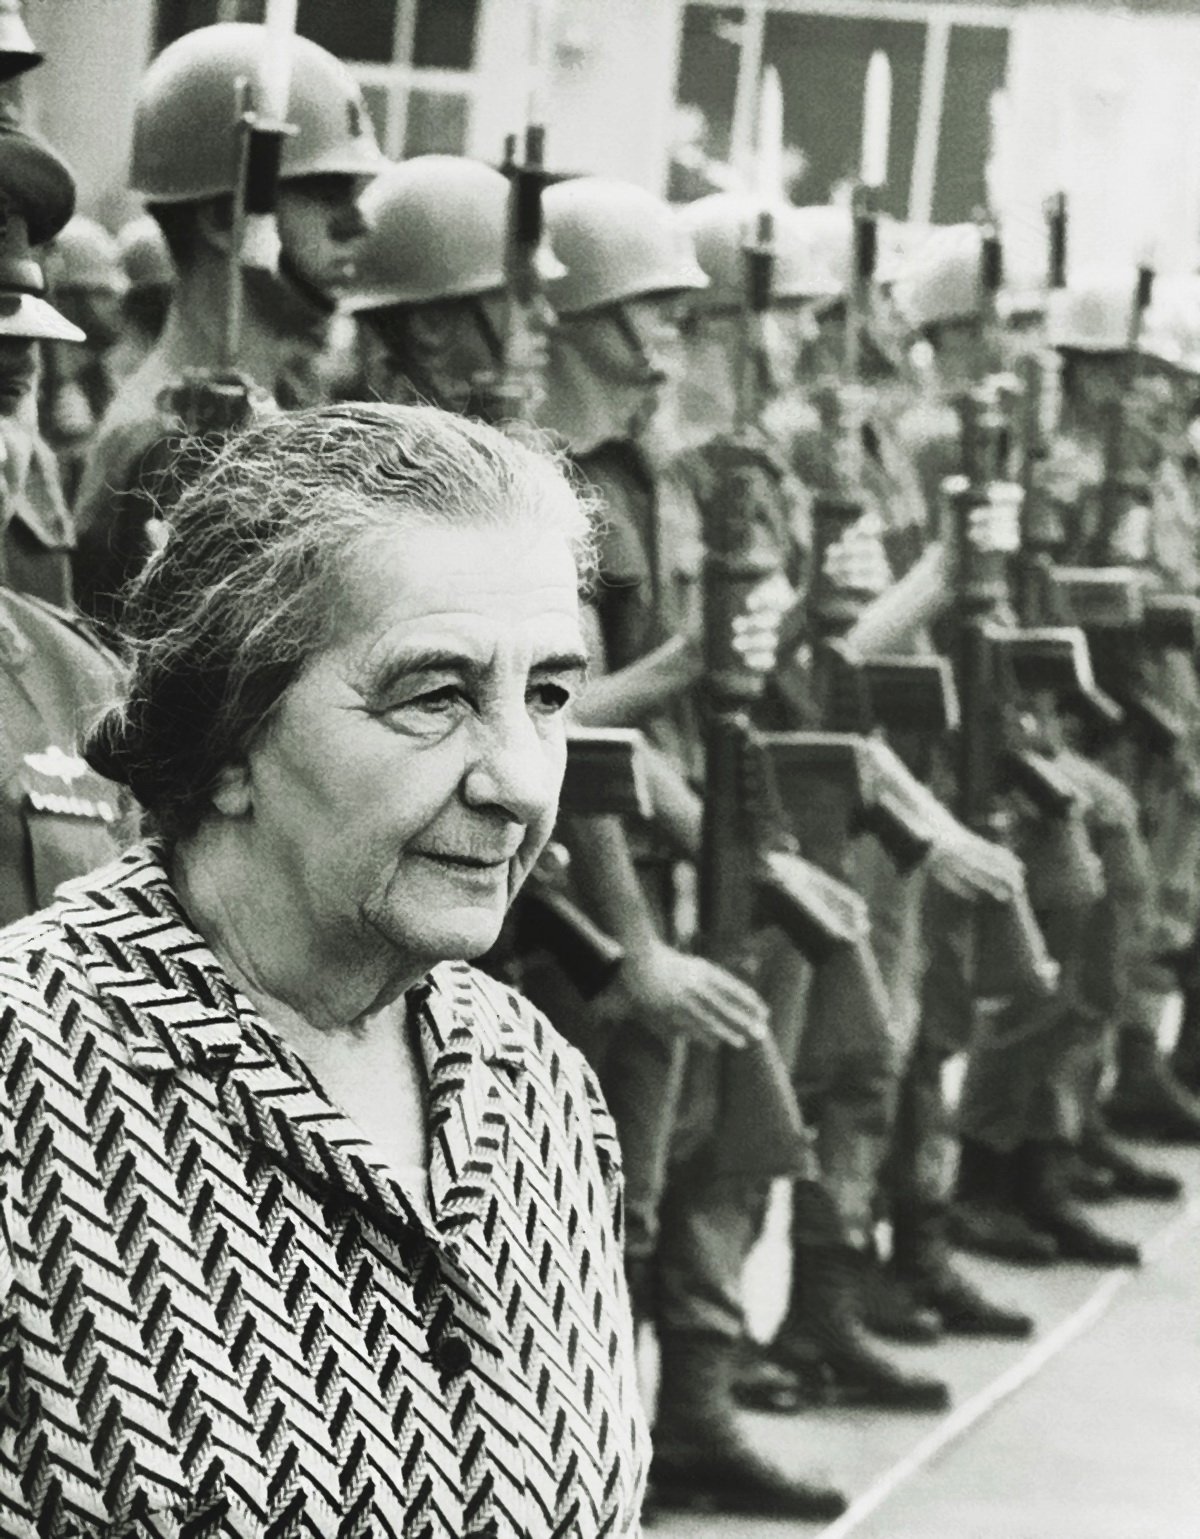 November 17, 1971 of Israel former Prime Minister Golda Meir inspecting Israeli troops on the Golan Heights